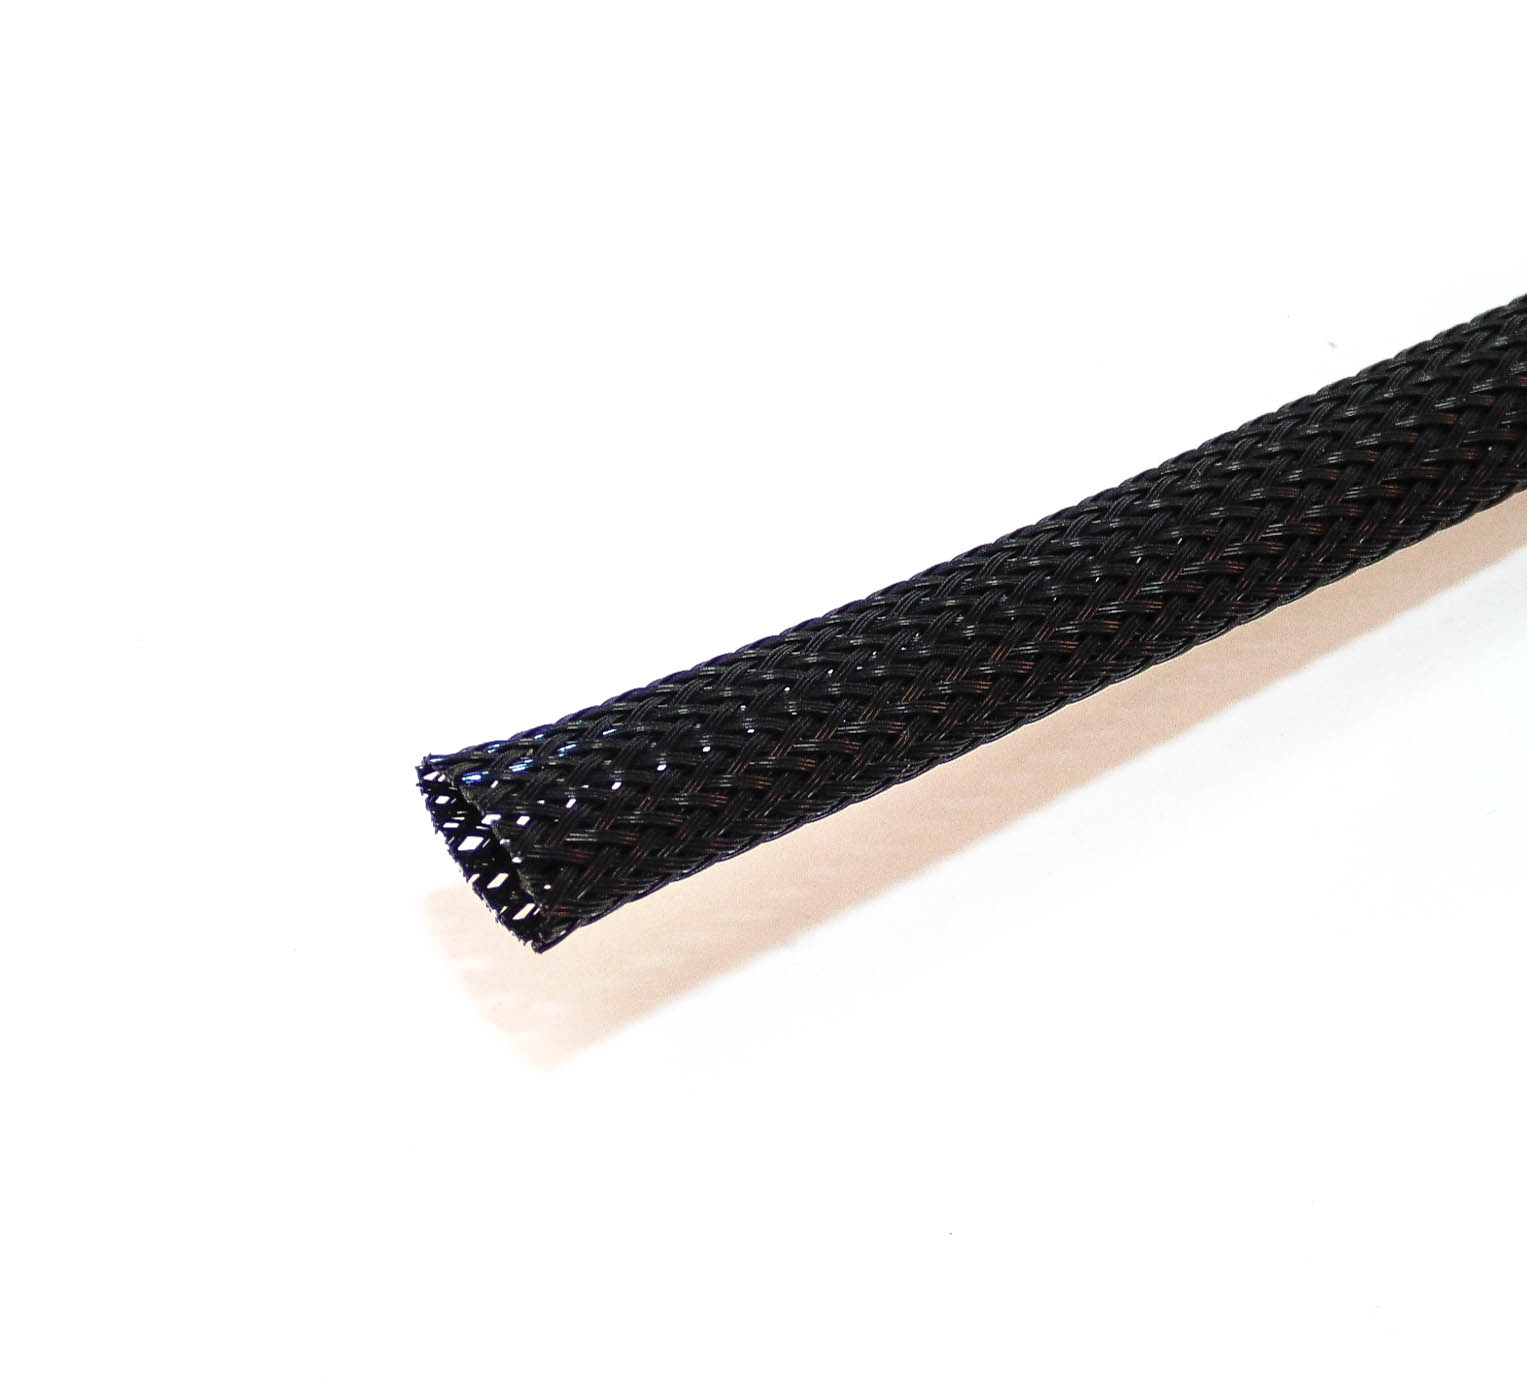 Multicomp Pro Expandable Braided Sleeving 8-12mm Black per metre